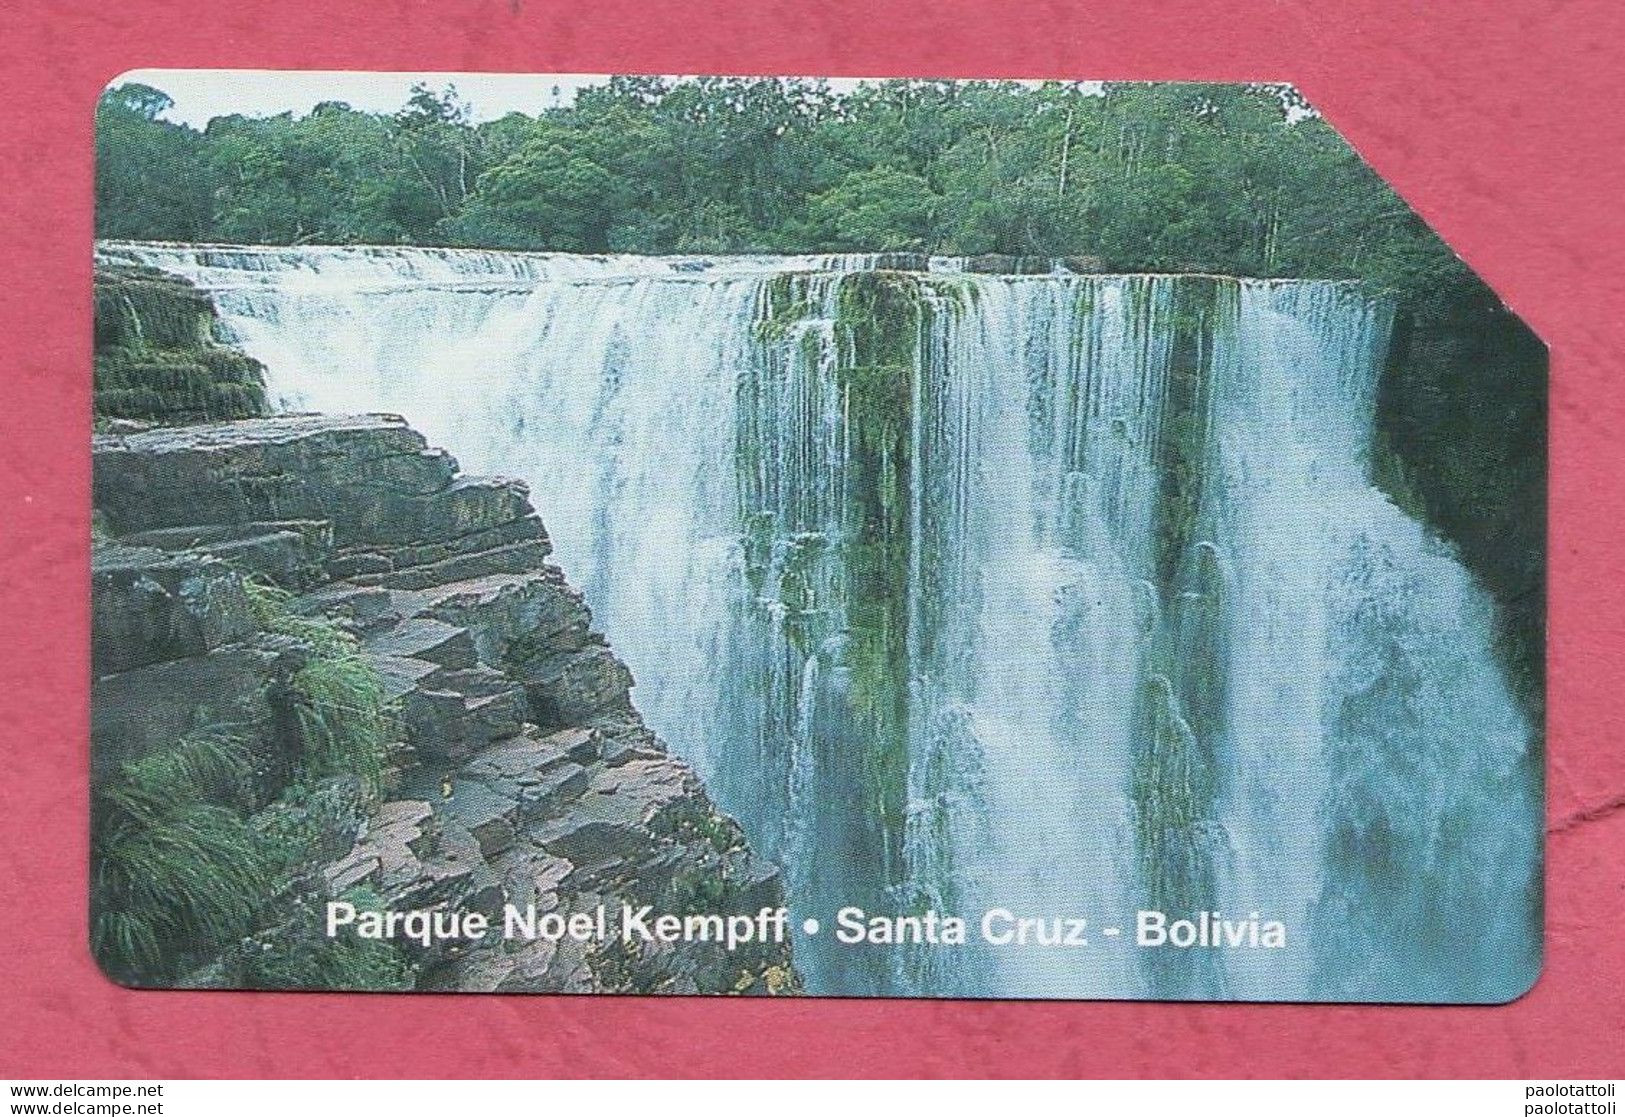 Bolivia-Entel- Parque Noel Kempff, Santa Cruz- Magnetic Phone Card Used By 20 Bs - Bolivien